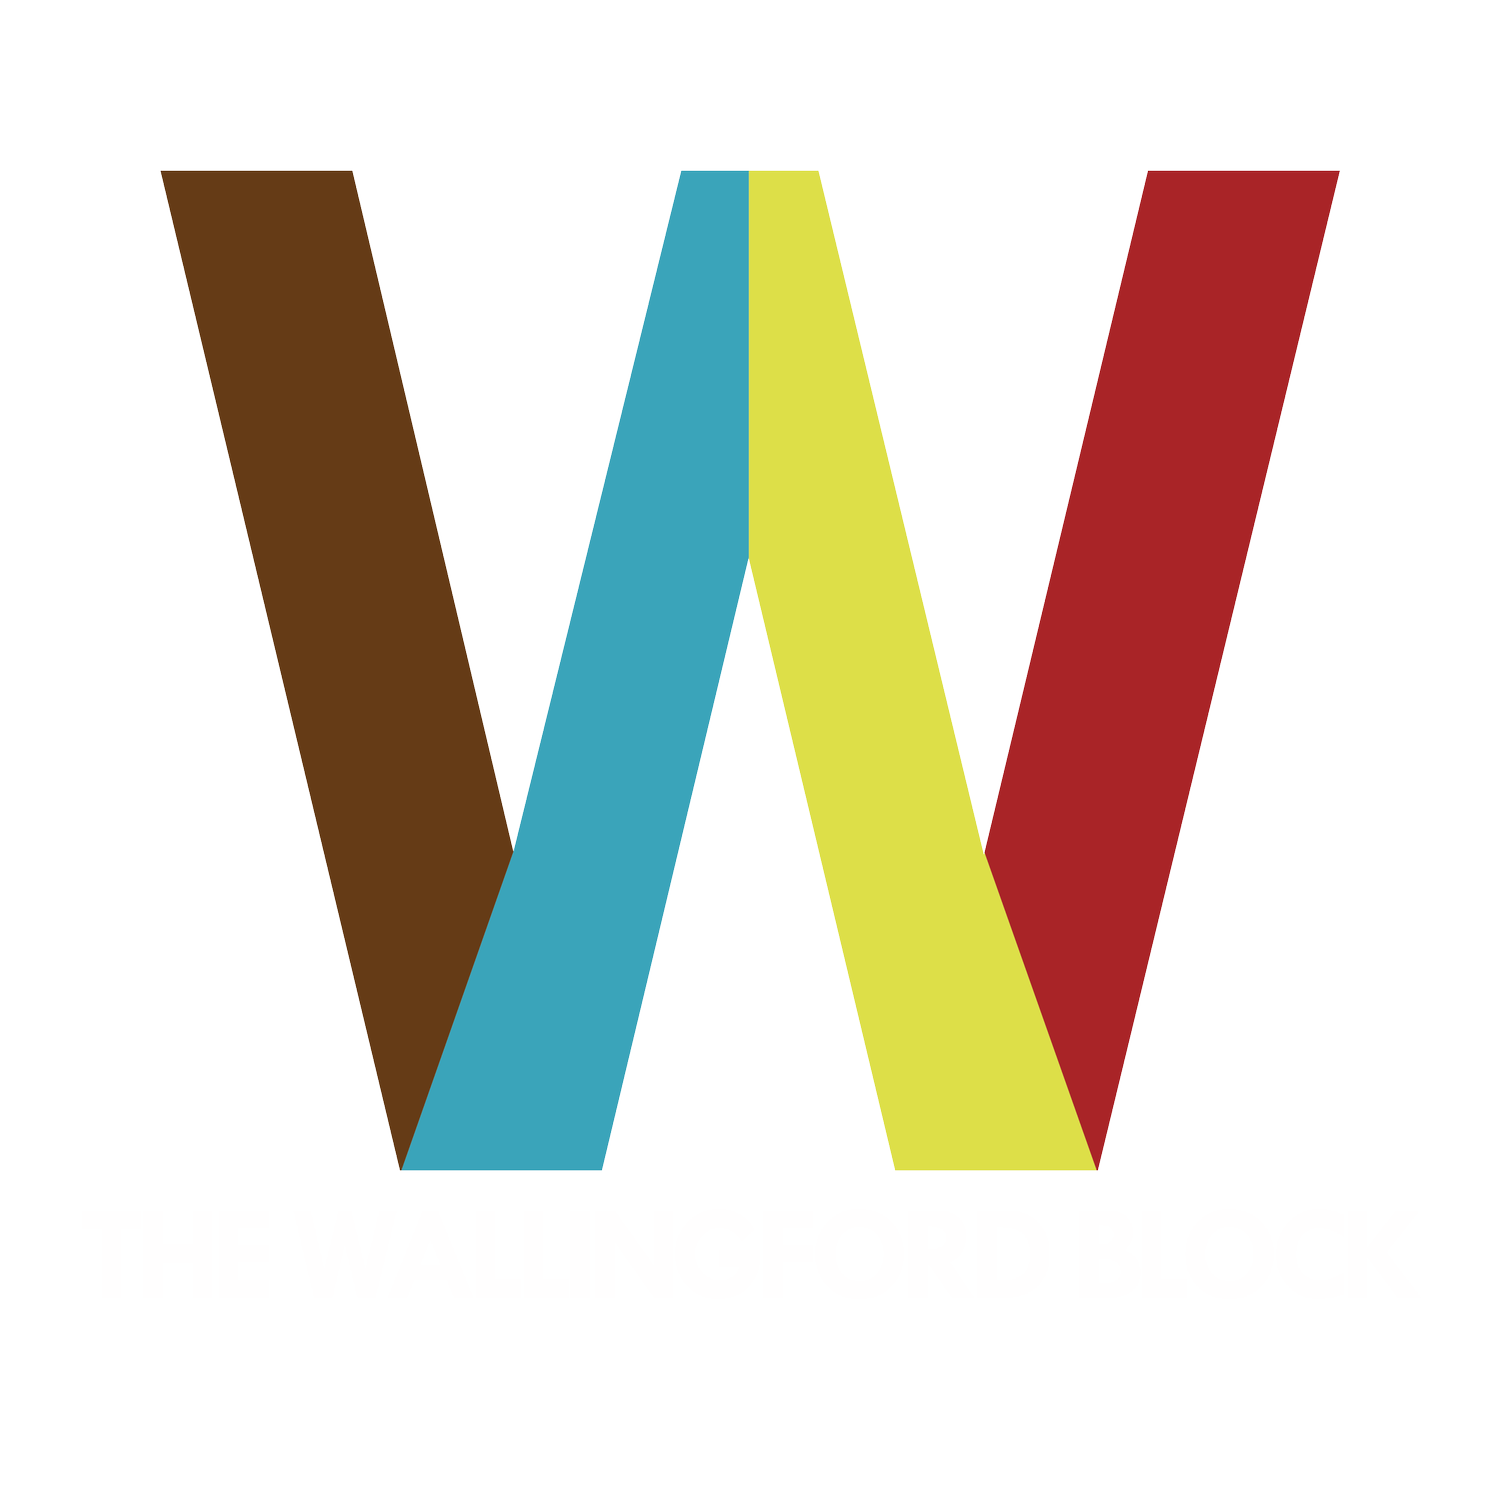 The Wallingford Block